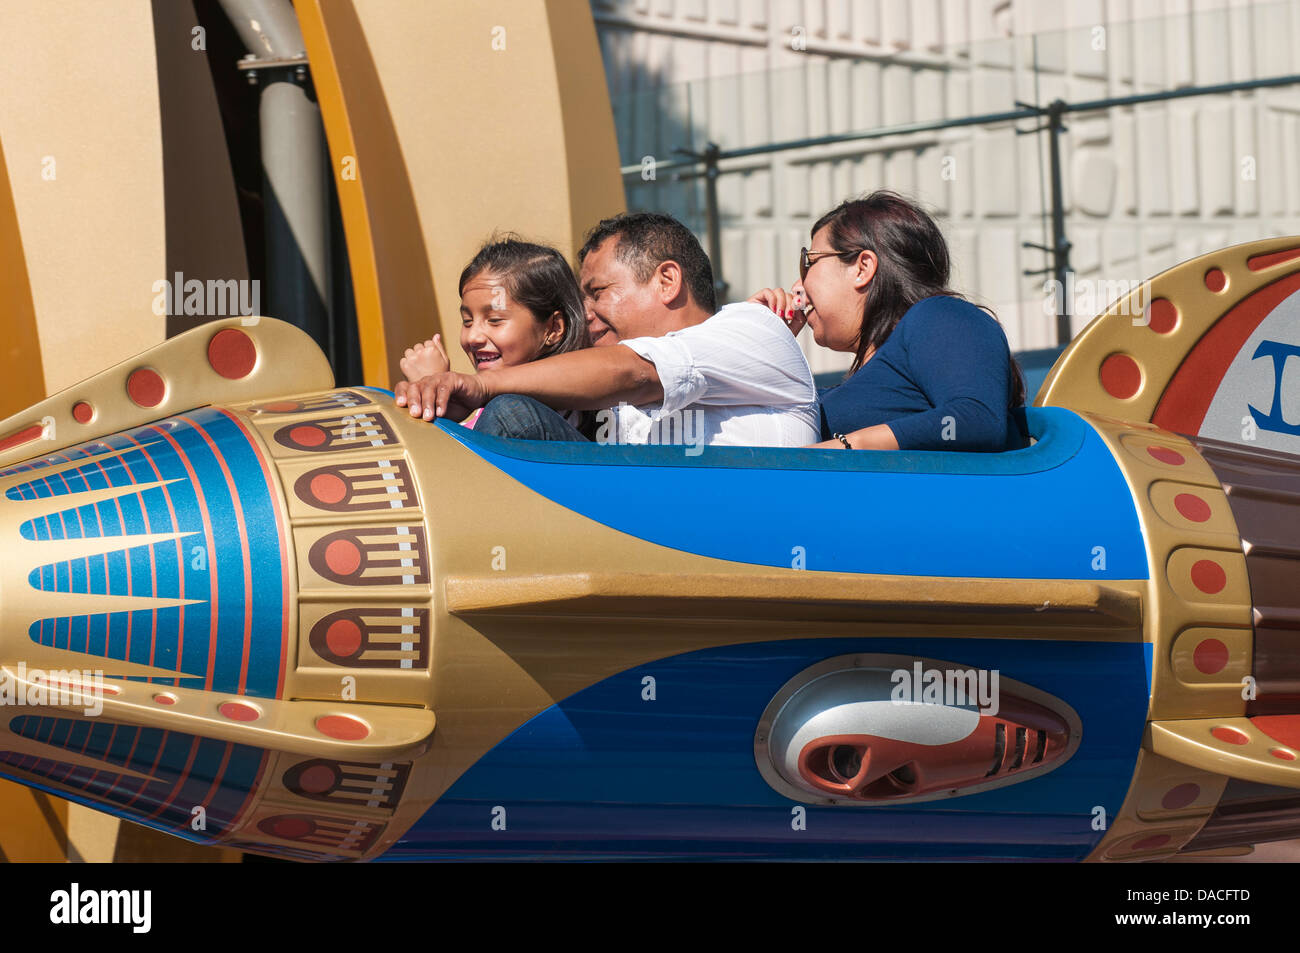 Astro Orbitor ride Tomorrowland de Disneyland, Anaheim, Californie. Banque D'Images